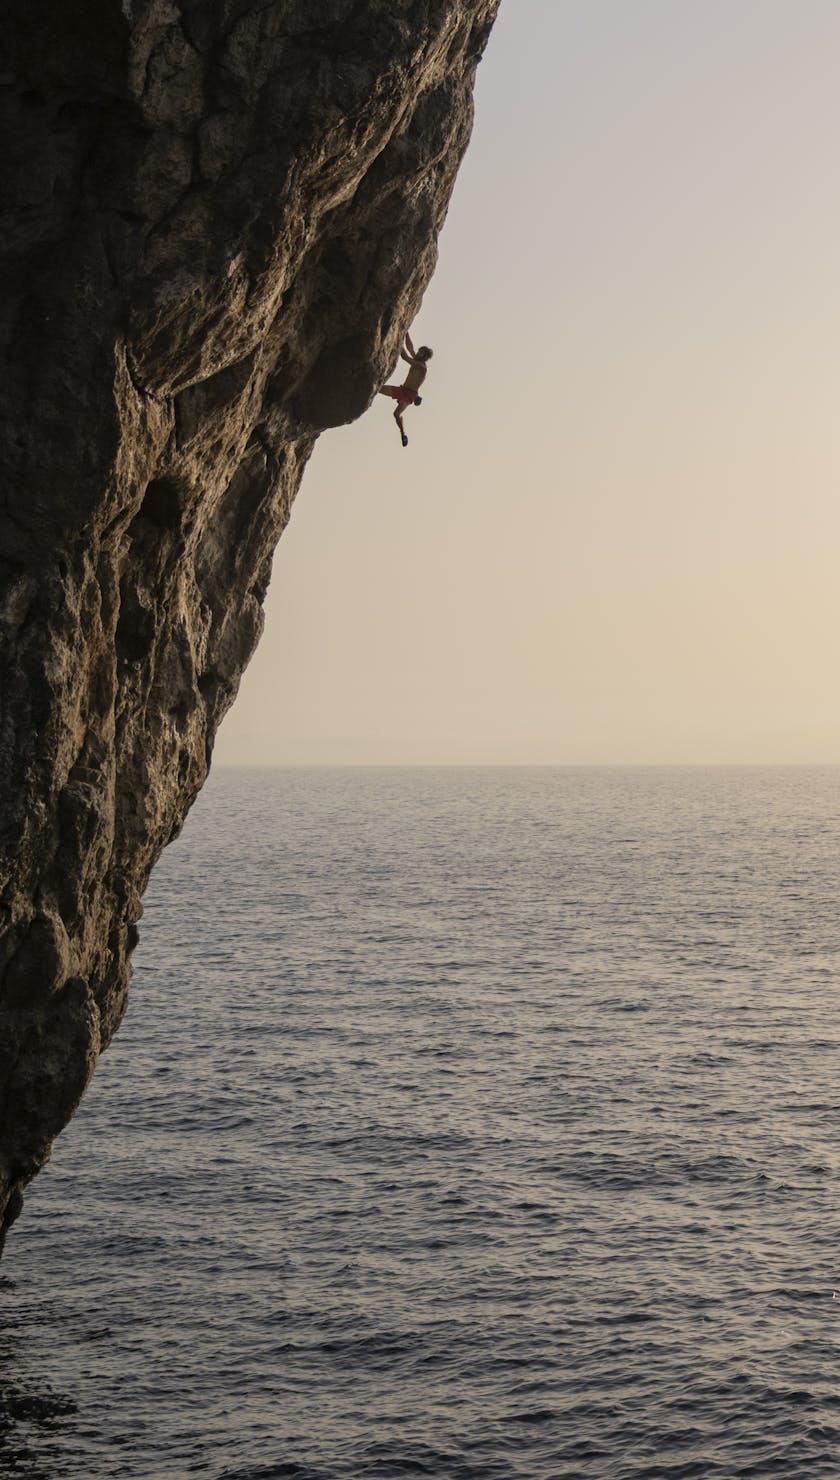 Climber climbing, ocean in background